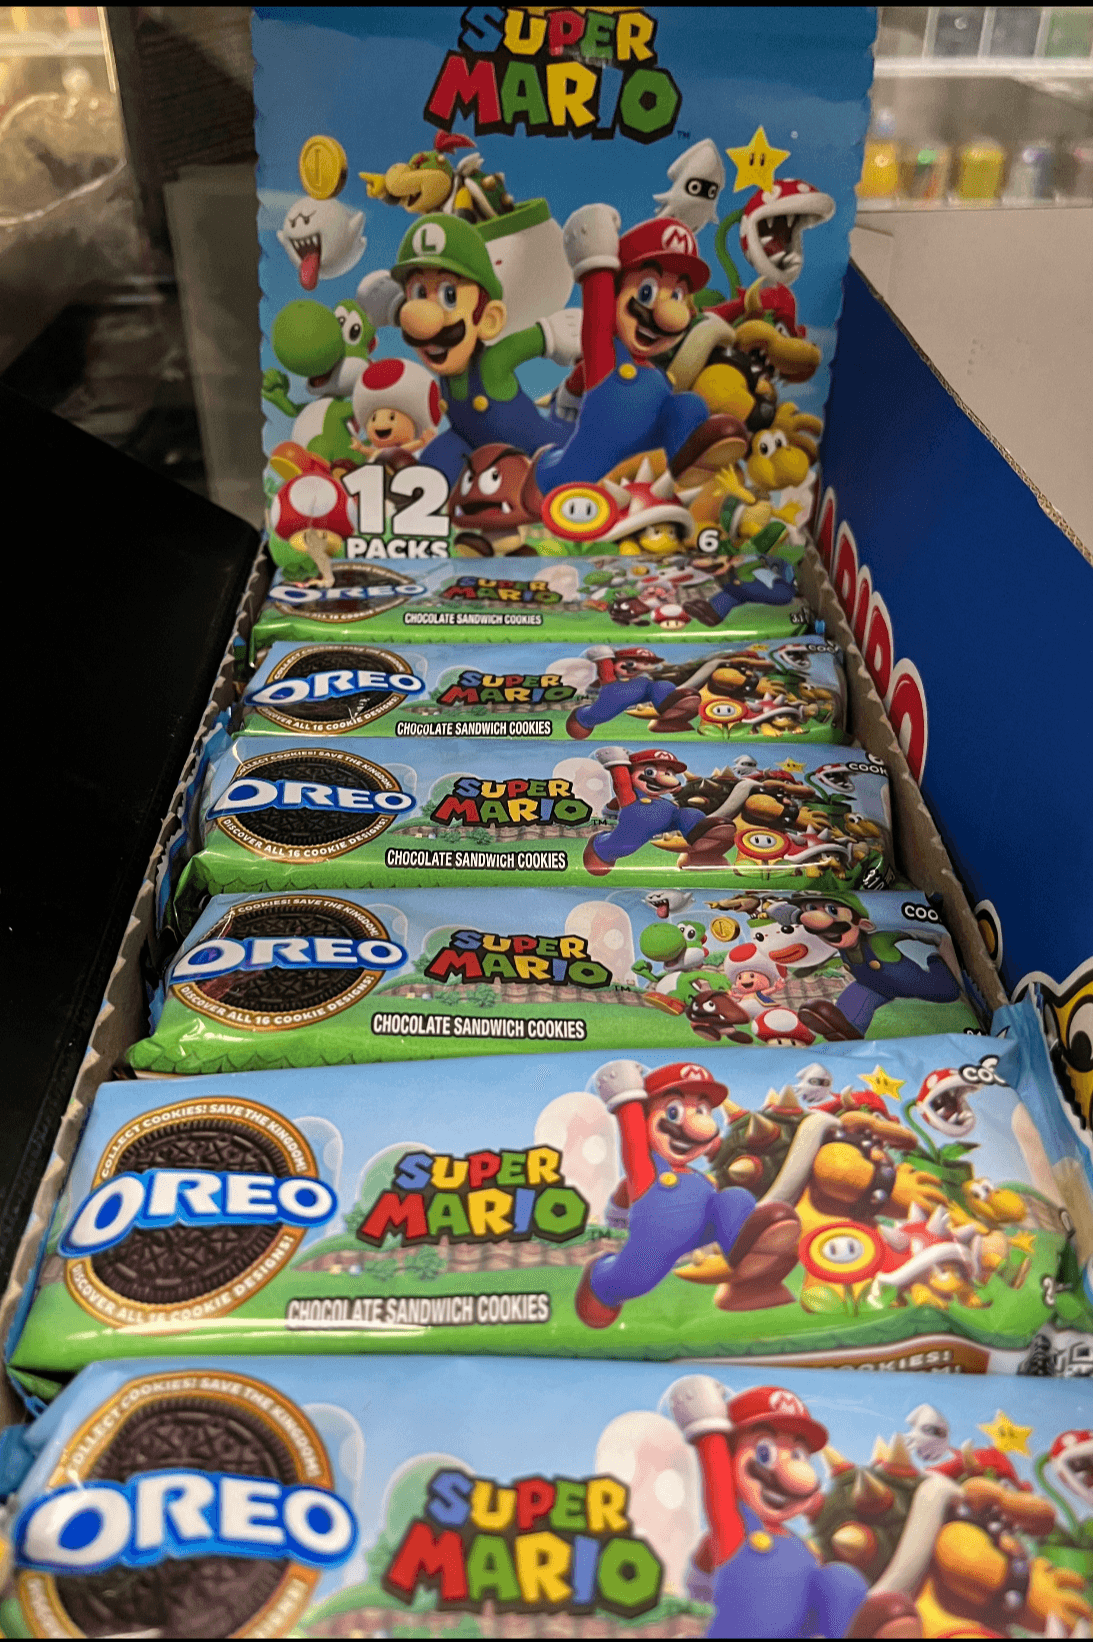 Super Mario Oreo Cookies - 6 Cookies Pack - Extreme Snacks